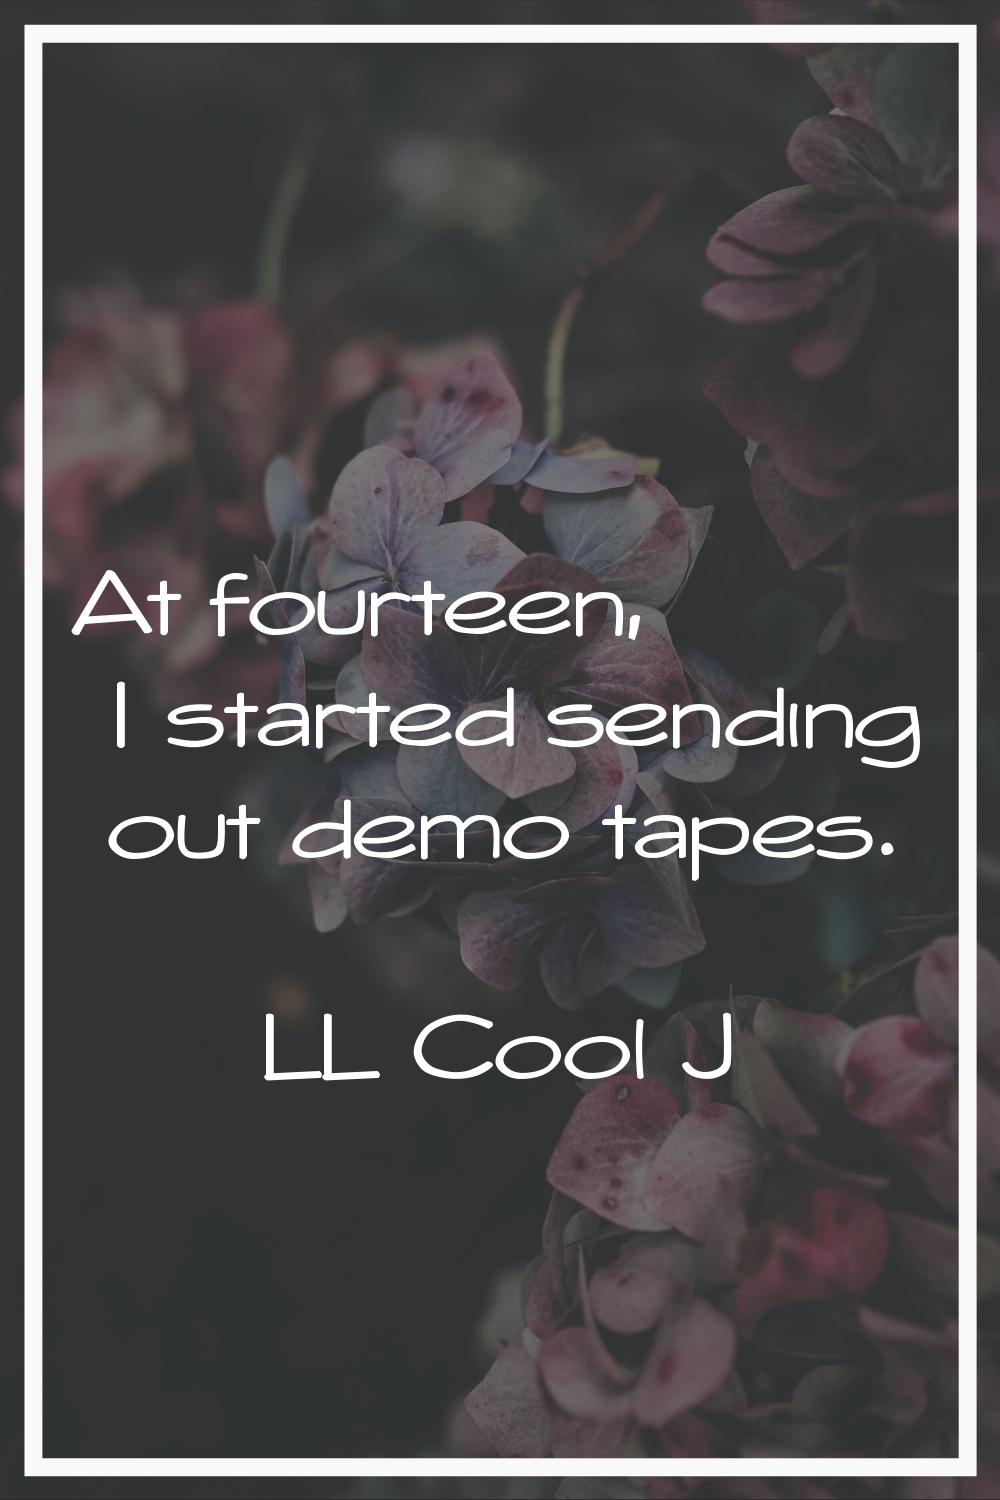 At fourteen, I started sending out demo tapes.